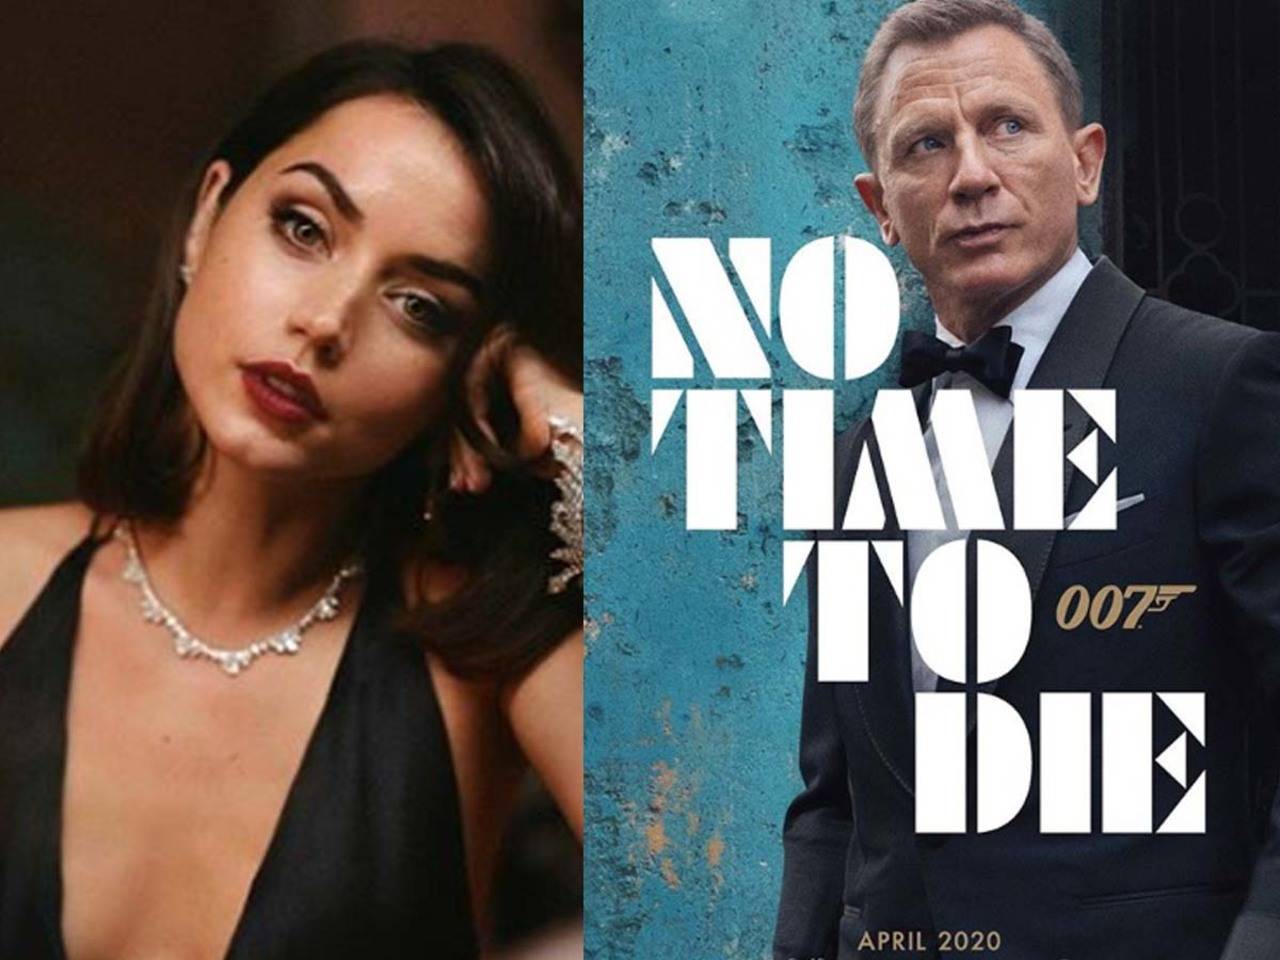 Bond Girl Ana de Armas walks the red carpet in 007-inspired look